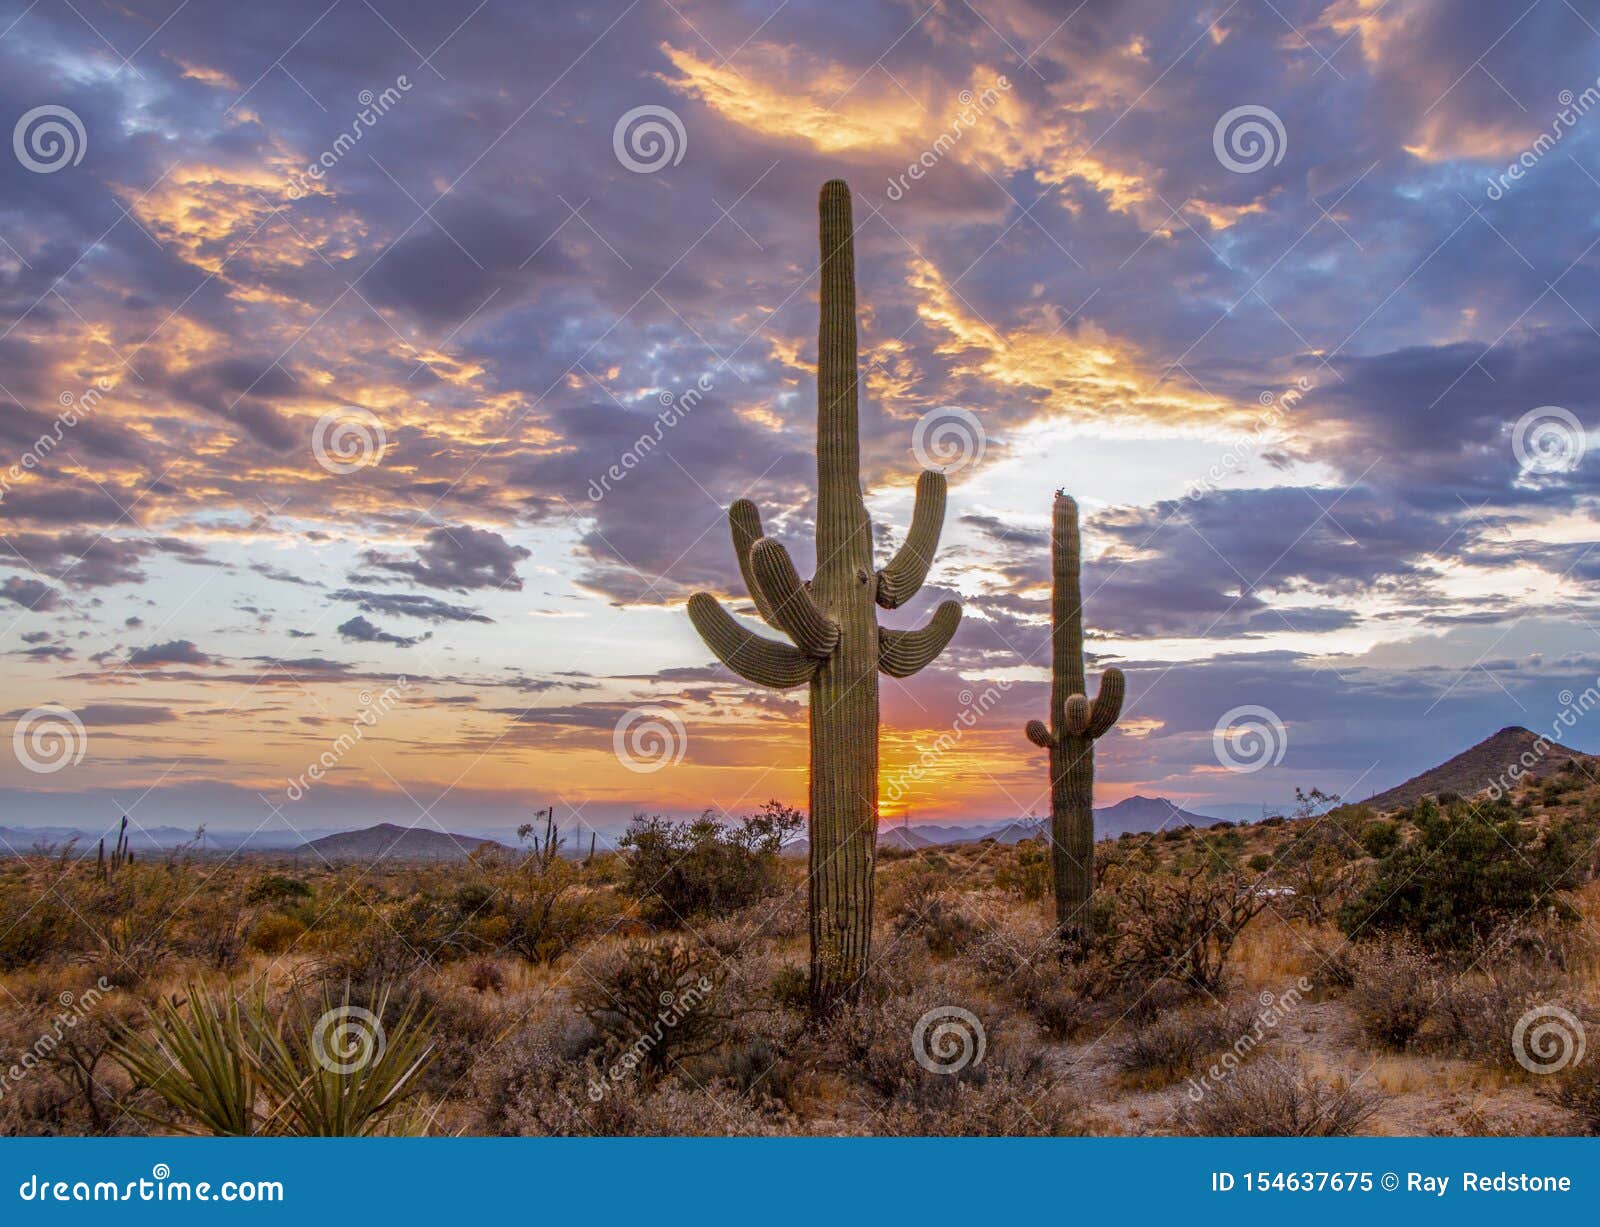 Saguaro Cactus Landscape with Vibrant Sunset Skies Stock Image - Image ...